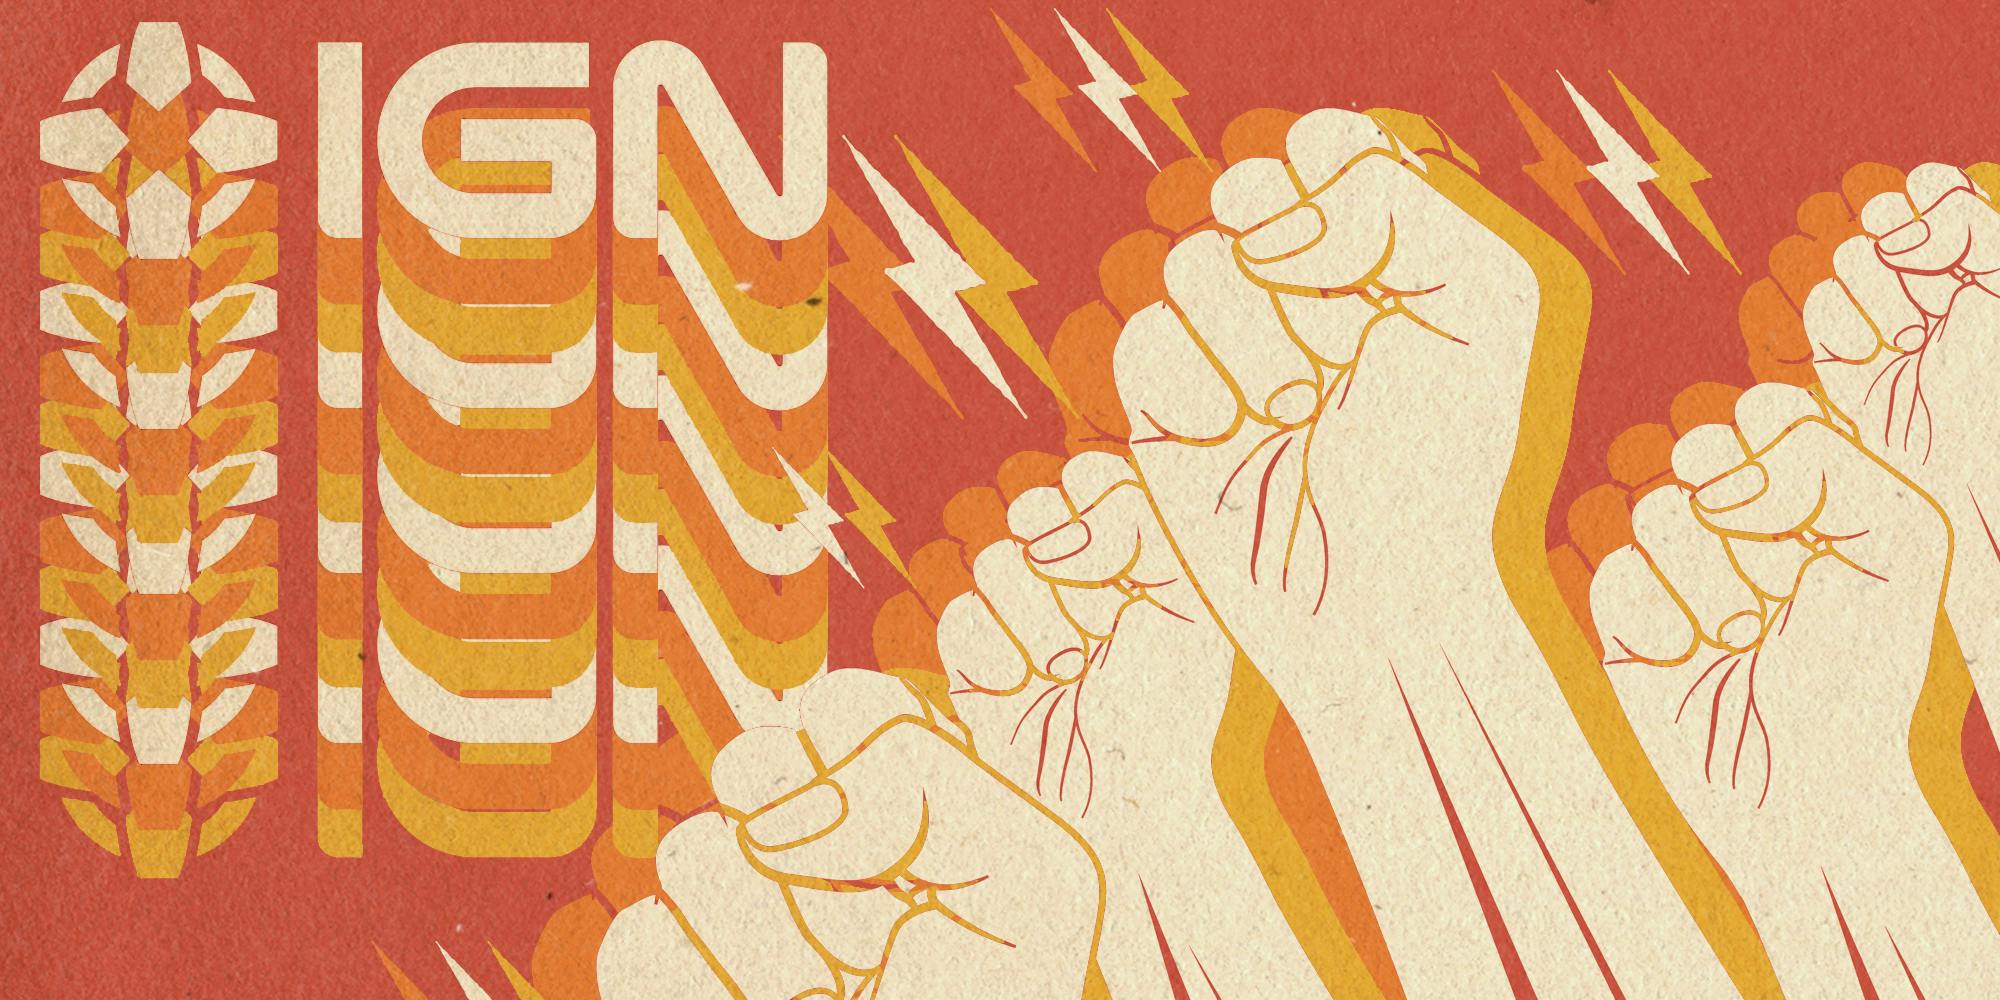 IGN logo with fists raised ign creators guild union unionization